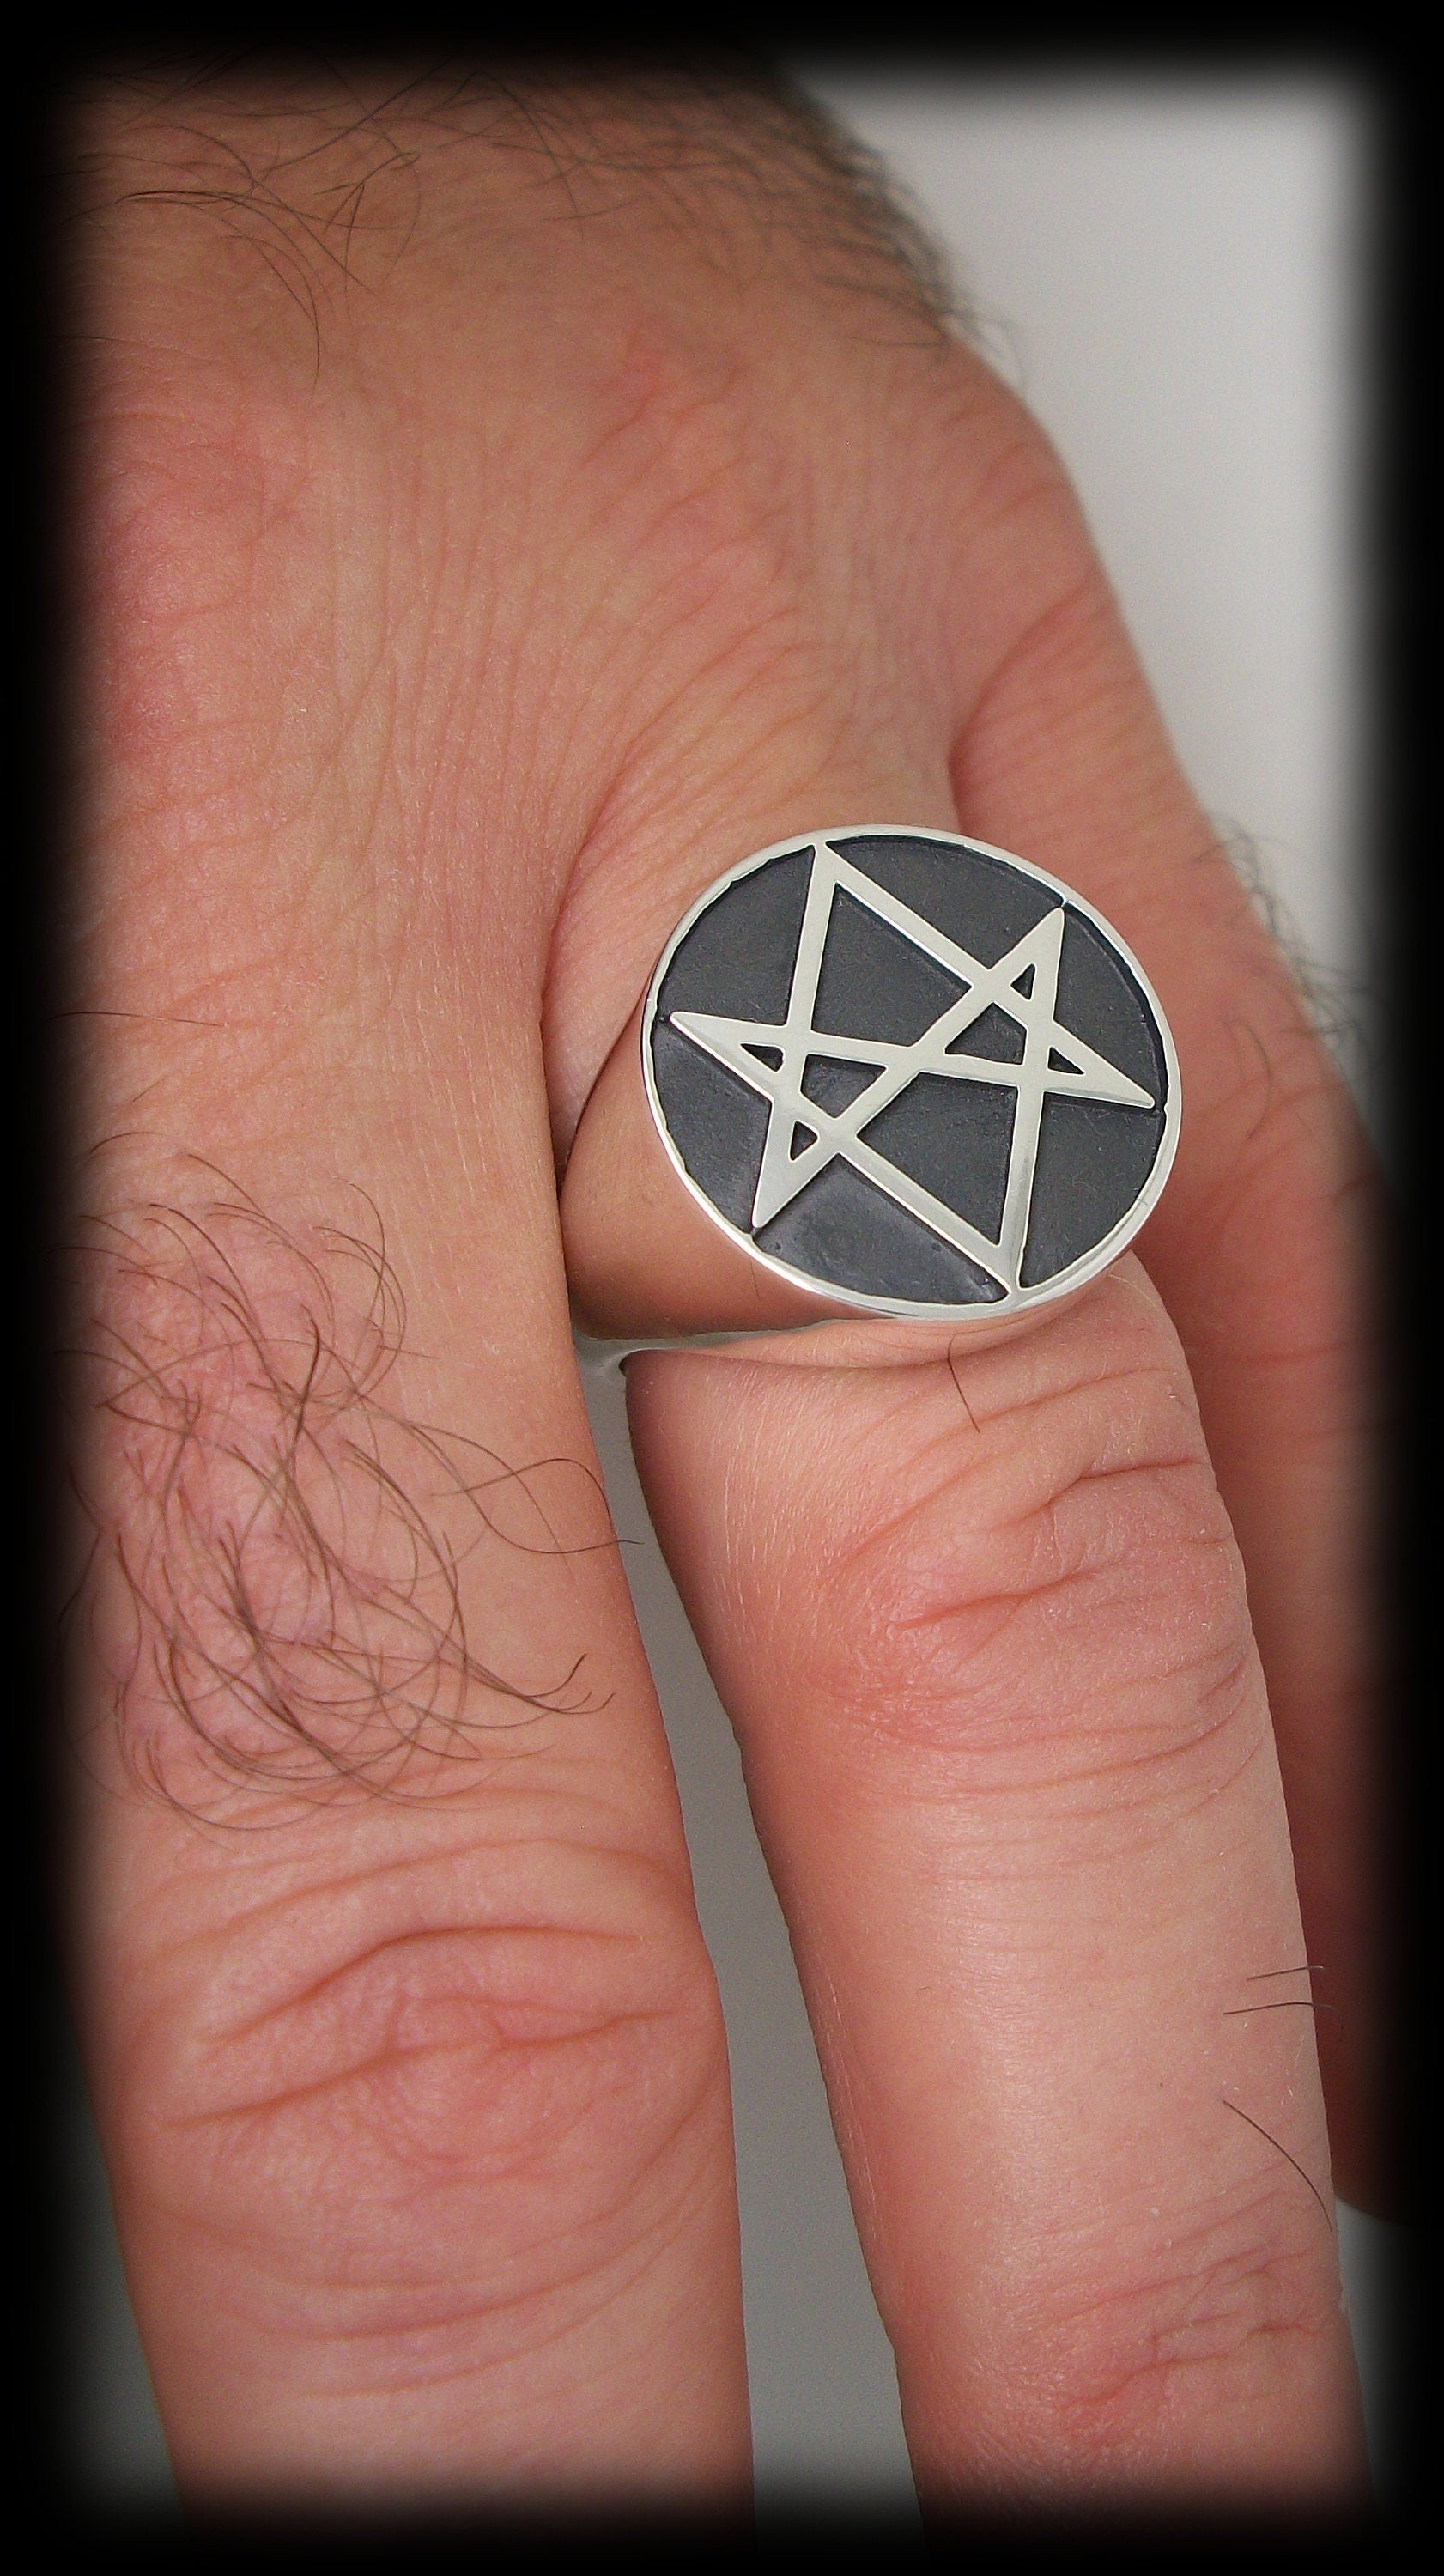 Unicursal Hexagram - Sterling Silver Hexagram Symbol Ring - ALL SIZES